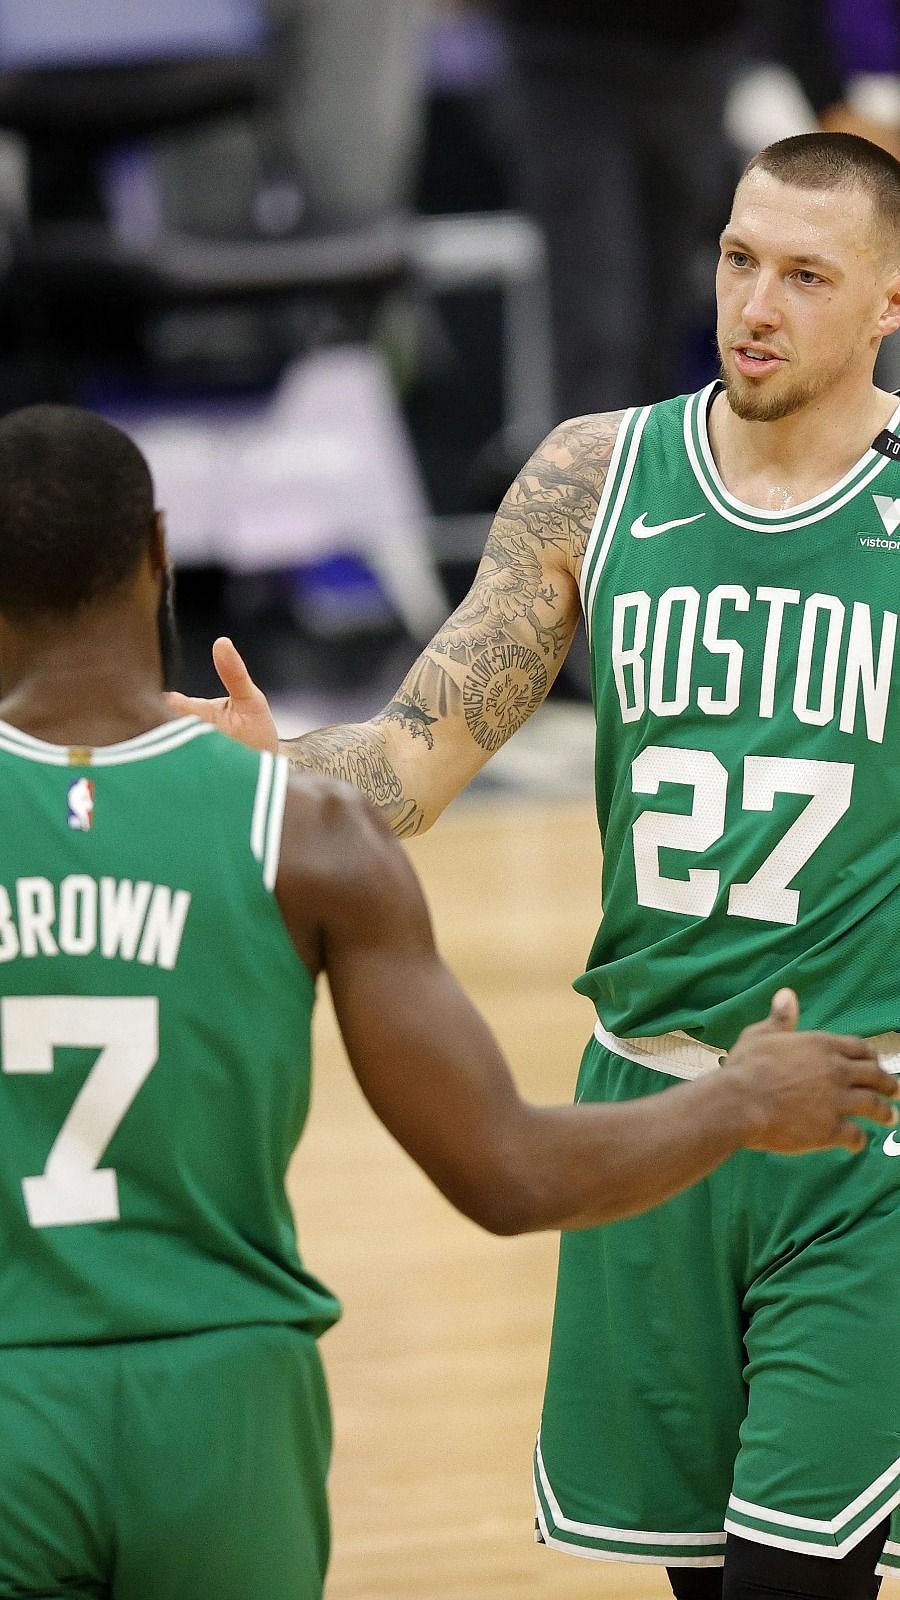 Sacramento Kings vs Boston Celtics How to watch, TV Schedule, Channel, Live stream